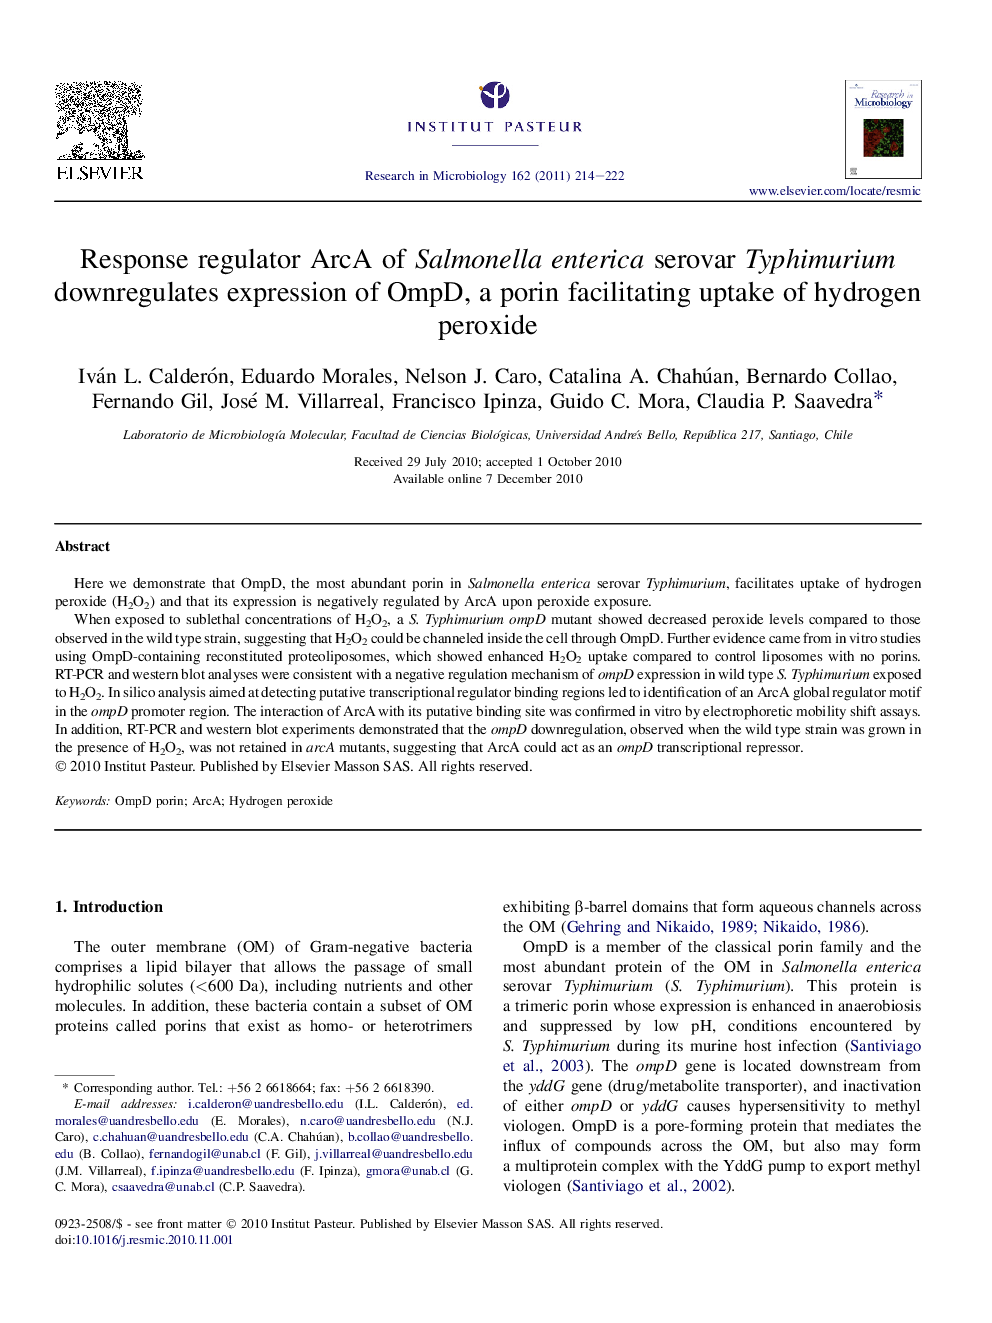 Response regulator ArcA of Salmonella enterica serovar Typhimurium downregulates expression of OmpD, a porin facilitating uptake of hydrogen peroxide